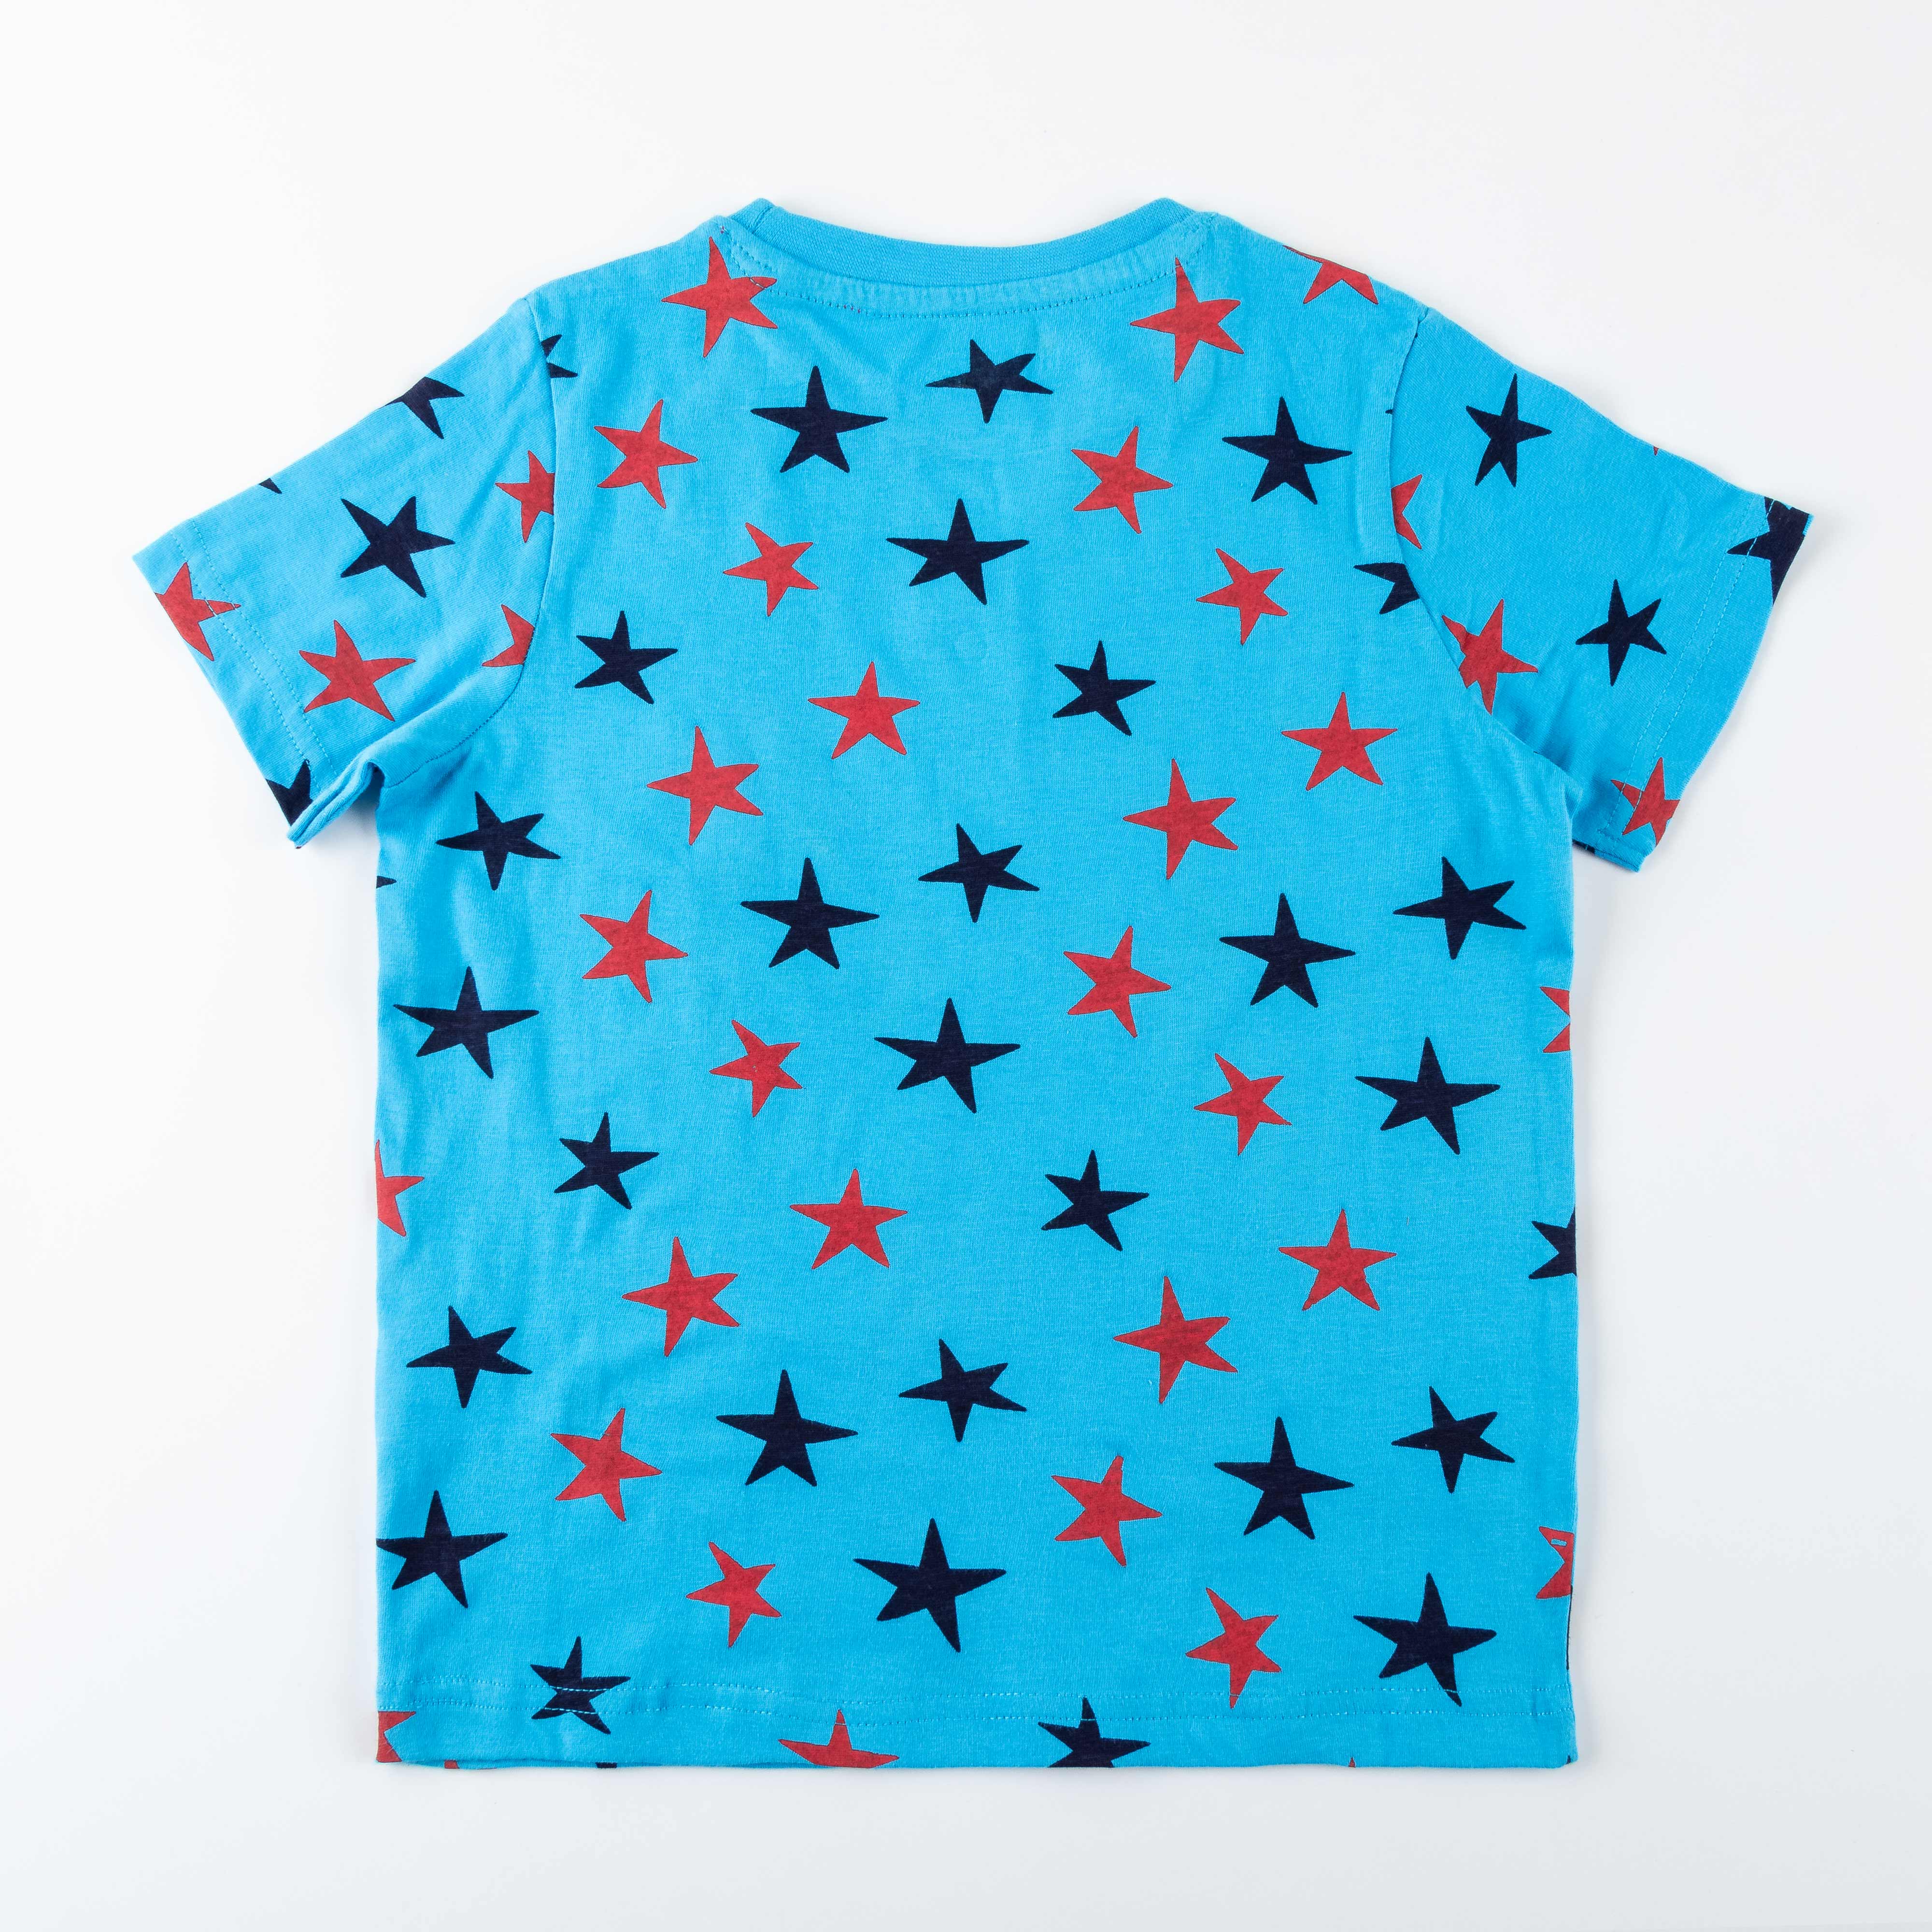 Boys Pyjama & Star Printed Top Sets